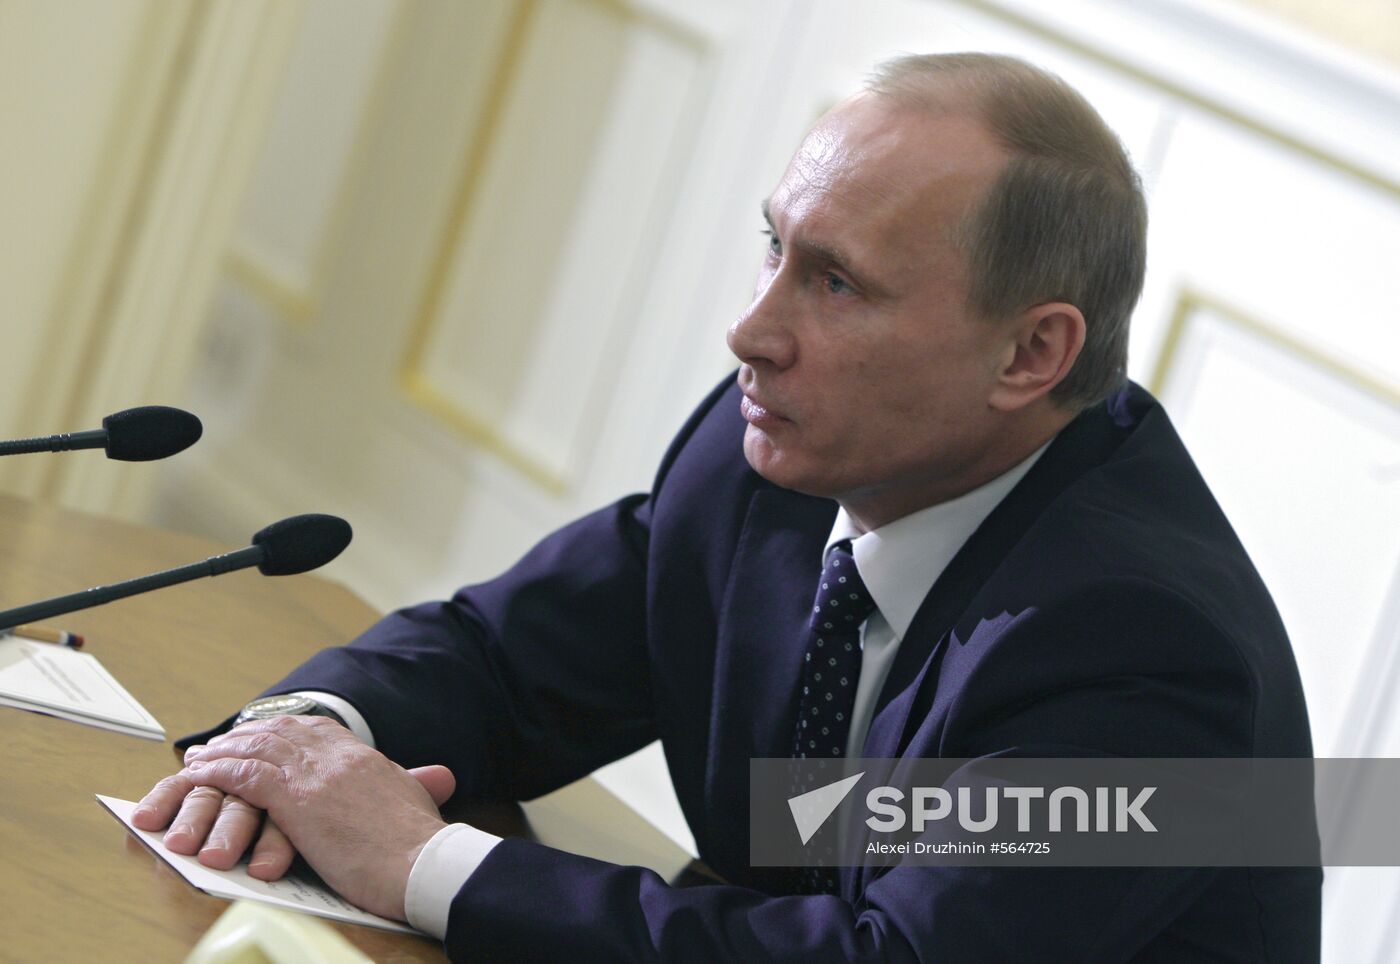 Vladimir Putin chairs session of government presidium